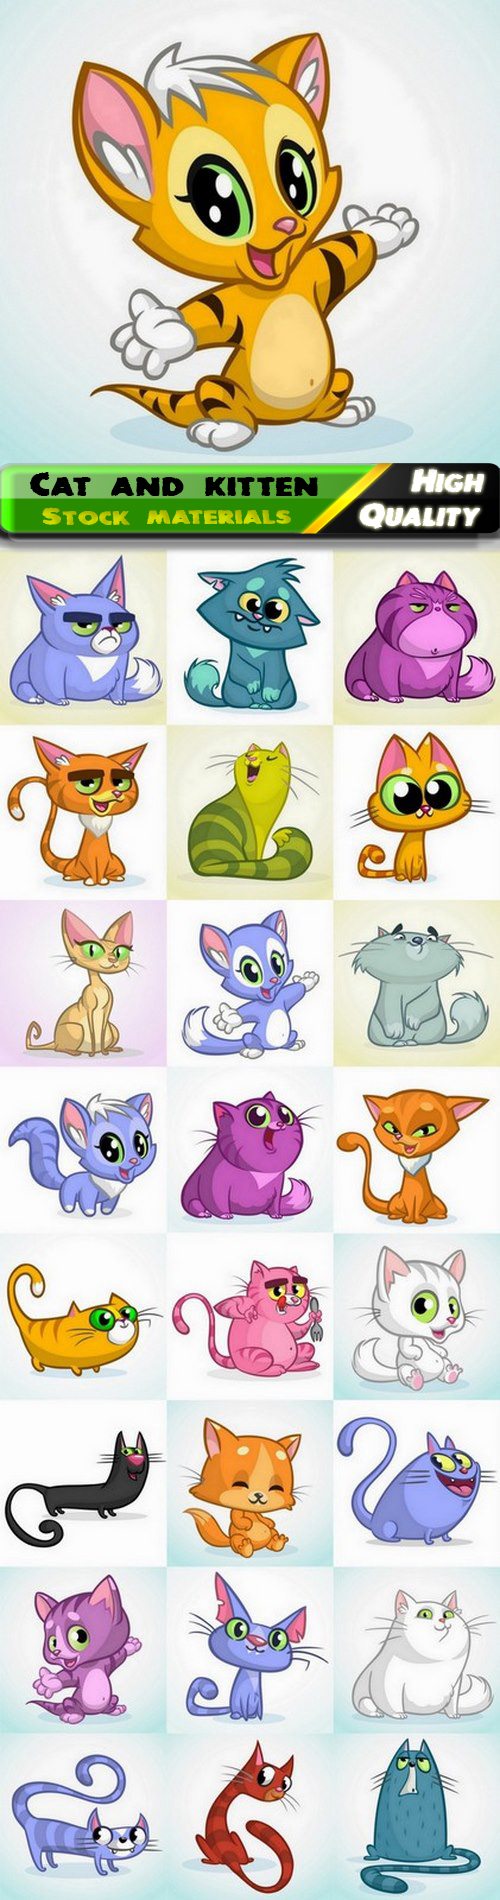 Cute illustration of cartoon cat and kitten of various breeds - 25 Eps